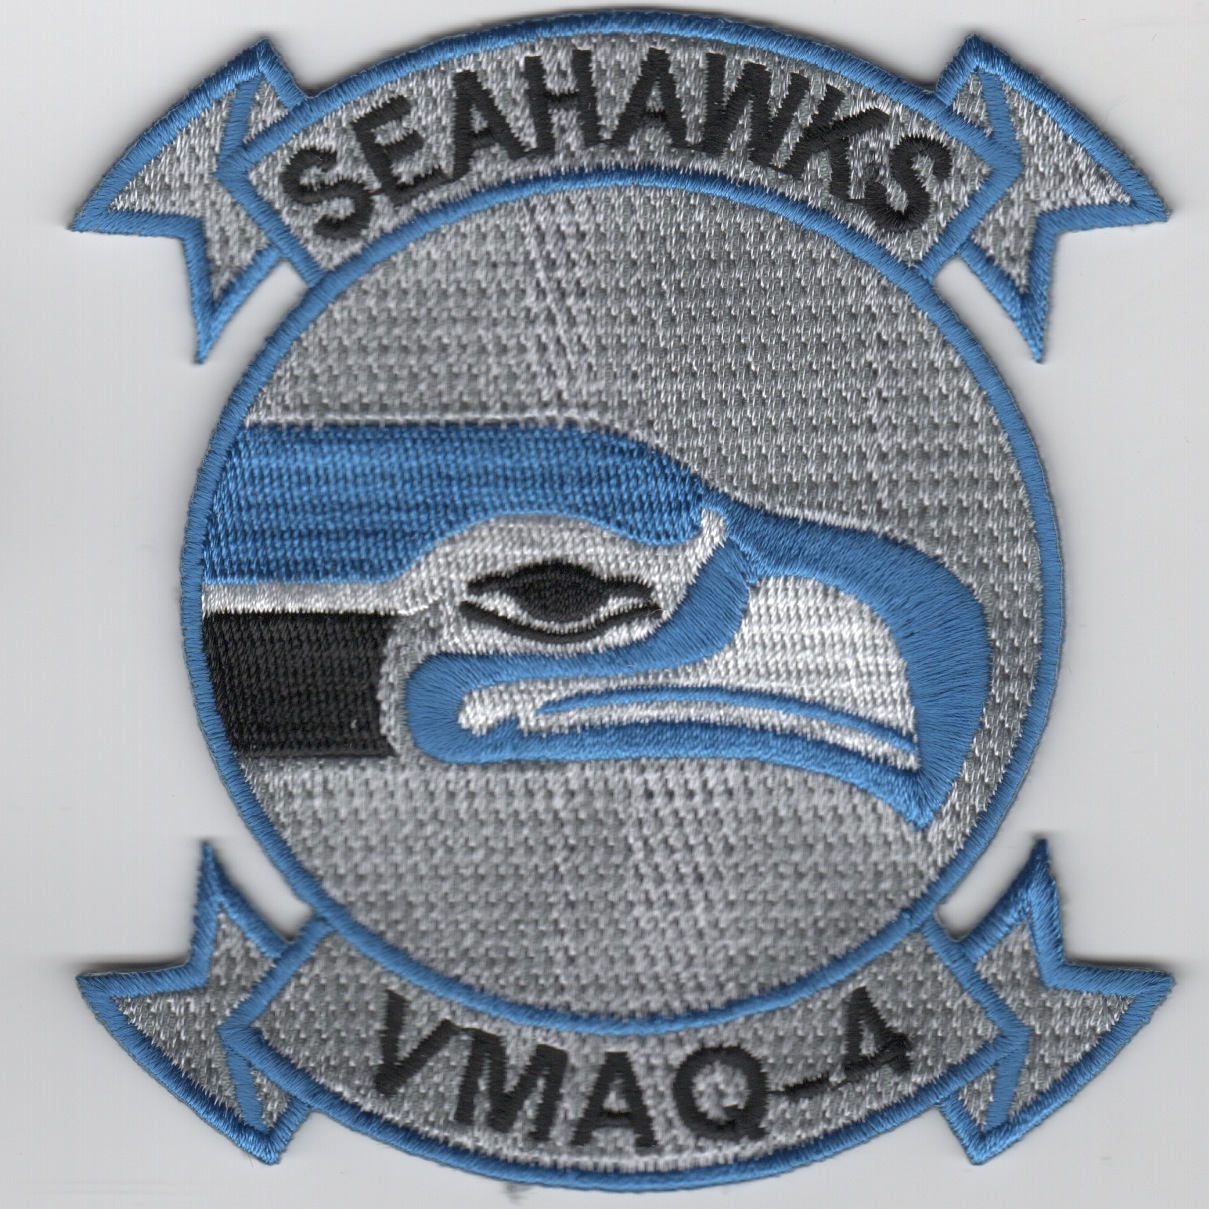 VMAQ-4 'Seahawk' Squadron Patch (Blue/Gray)